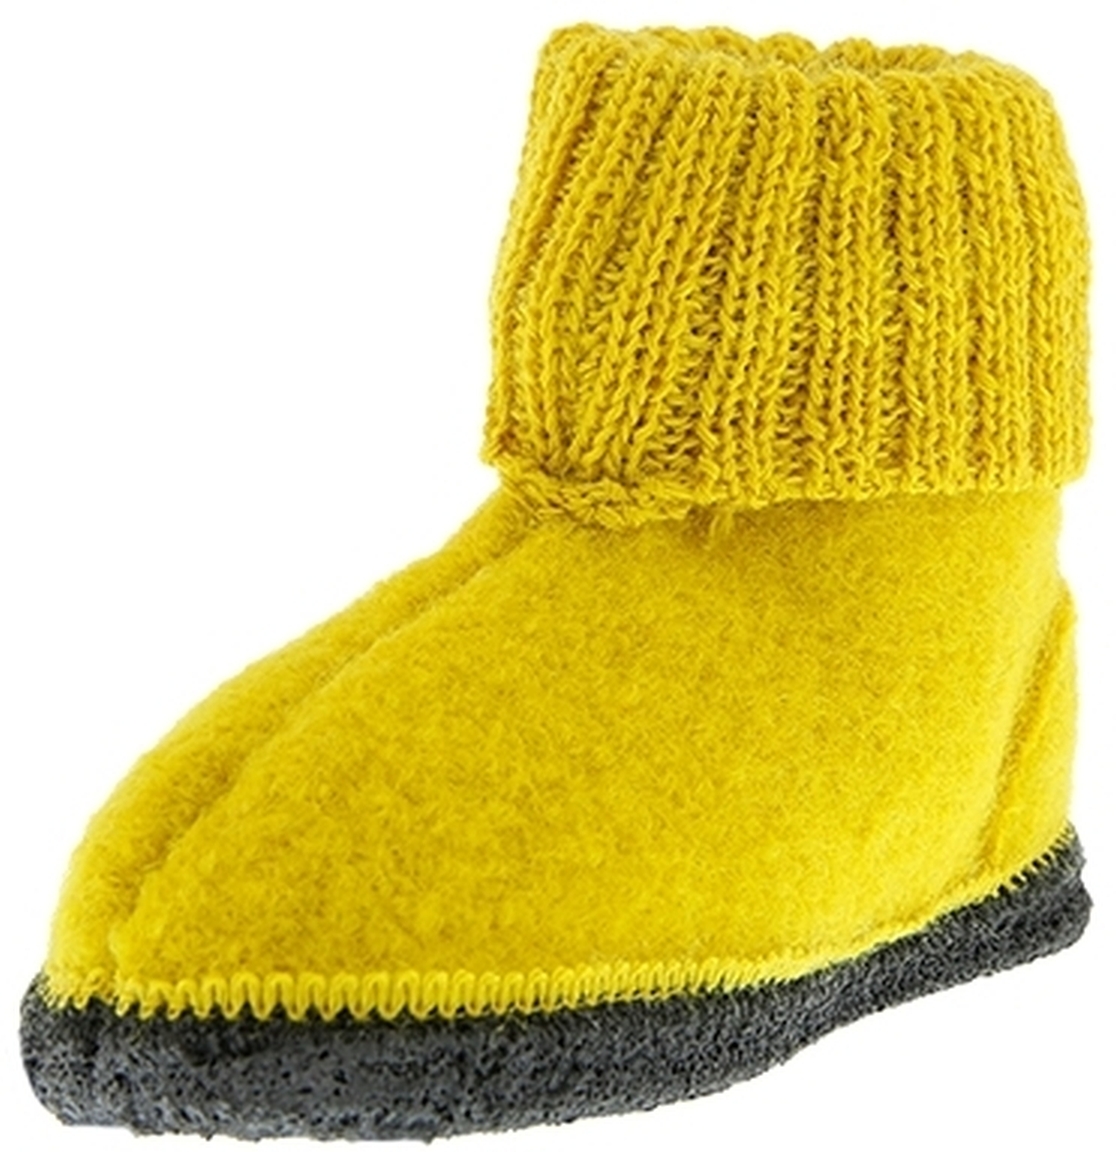 Bergstein Cozy Yellow Wool